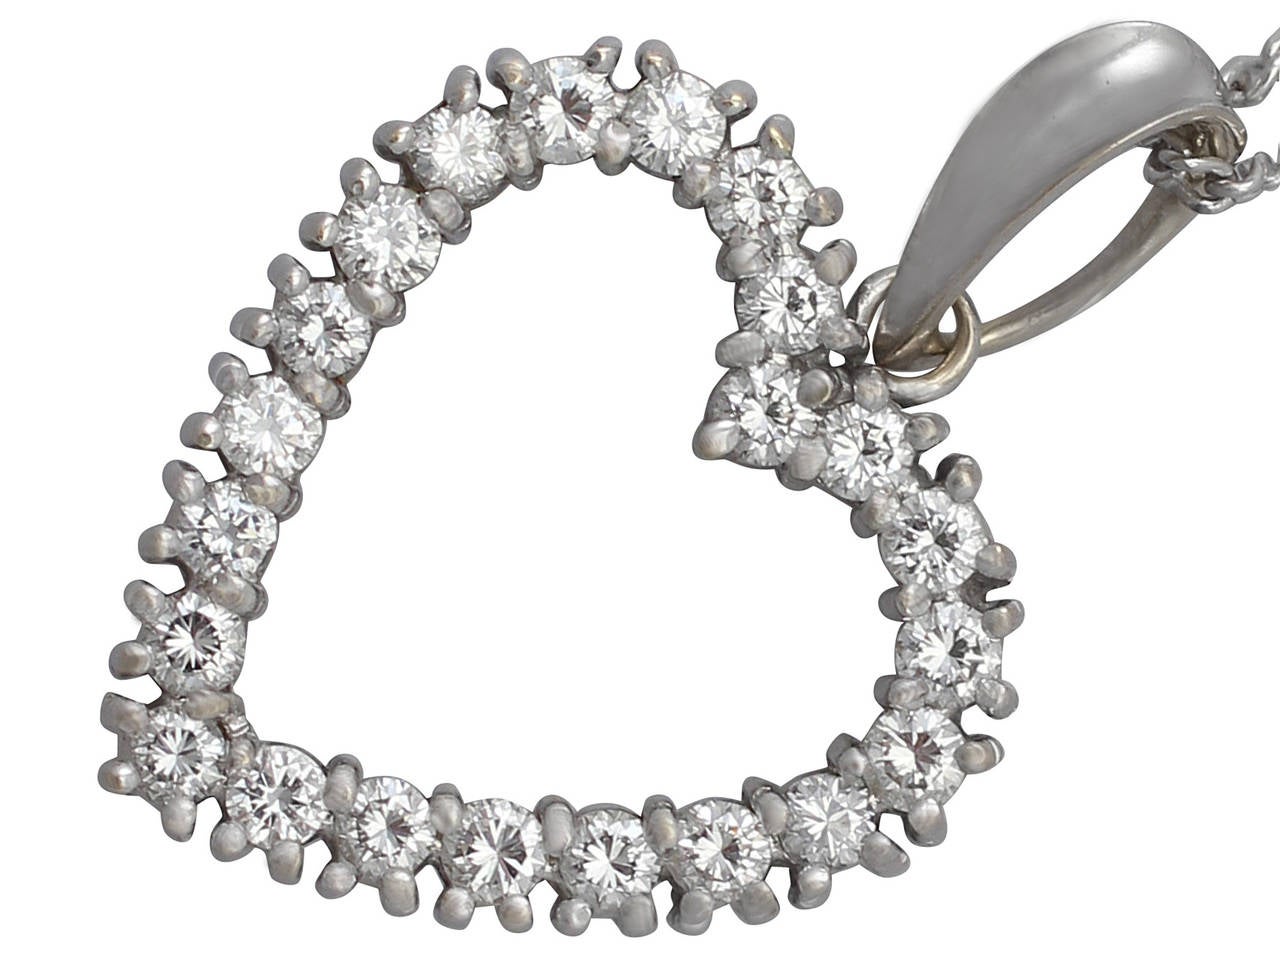 vintage diamond heart pendant